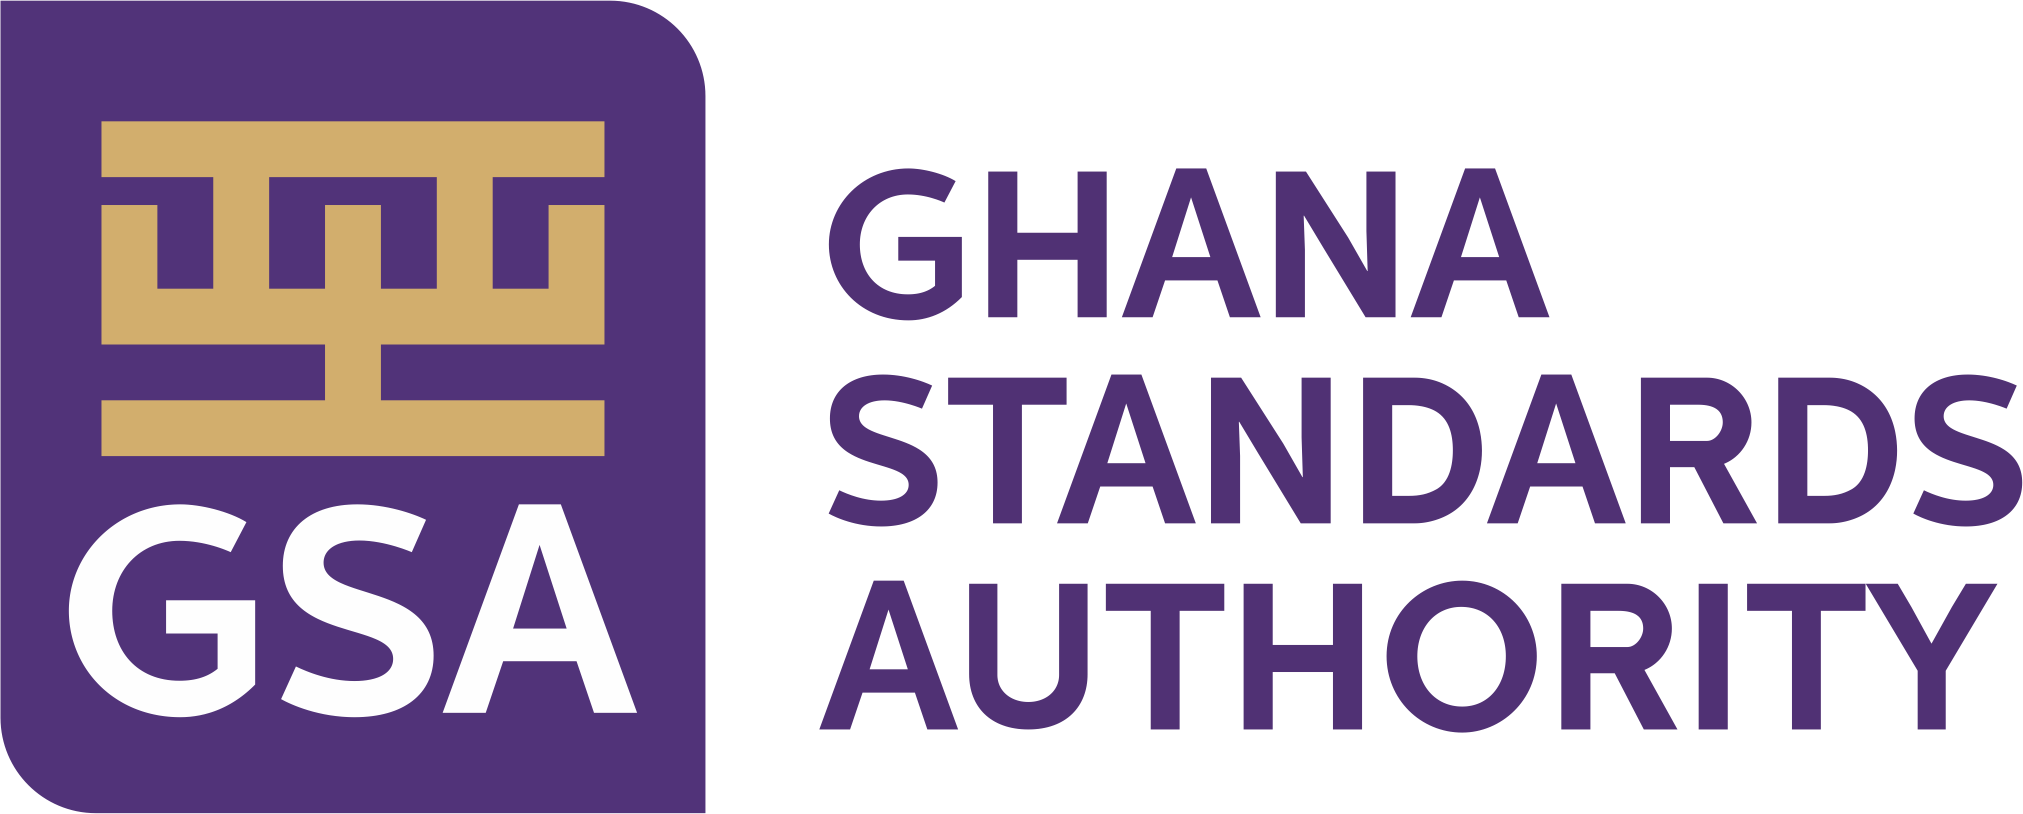 Ghana Standards Authority logo